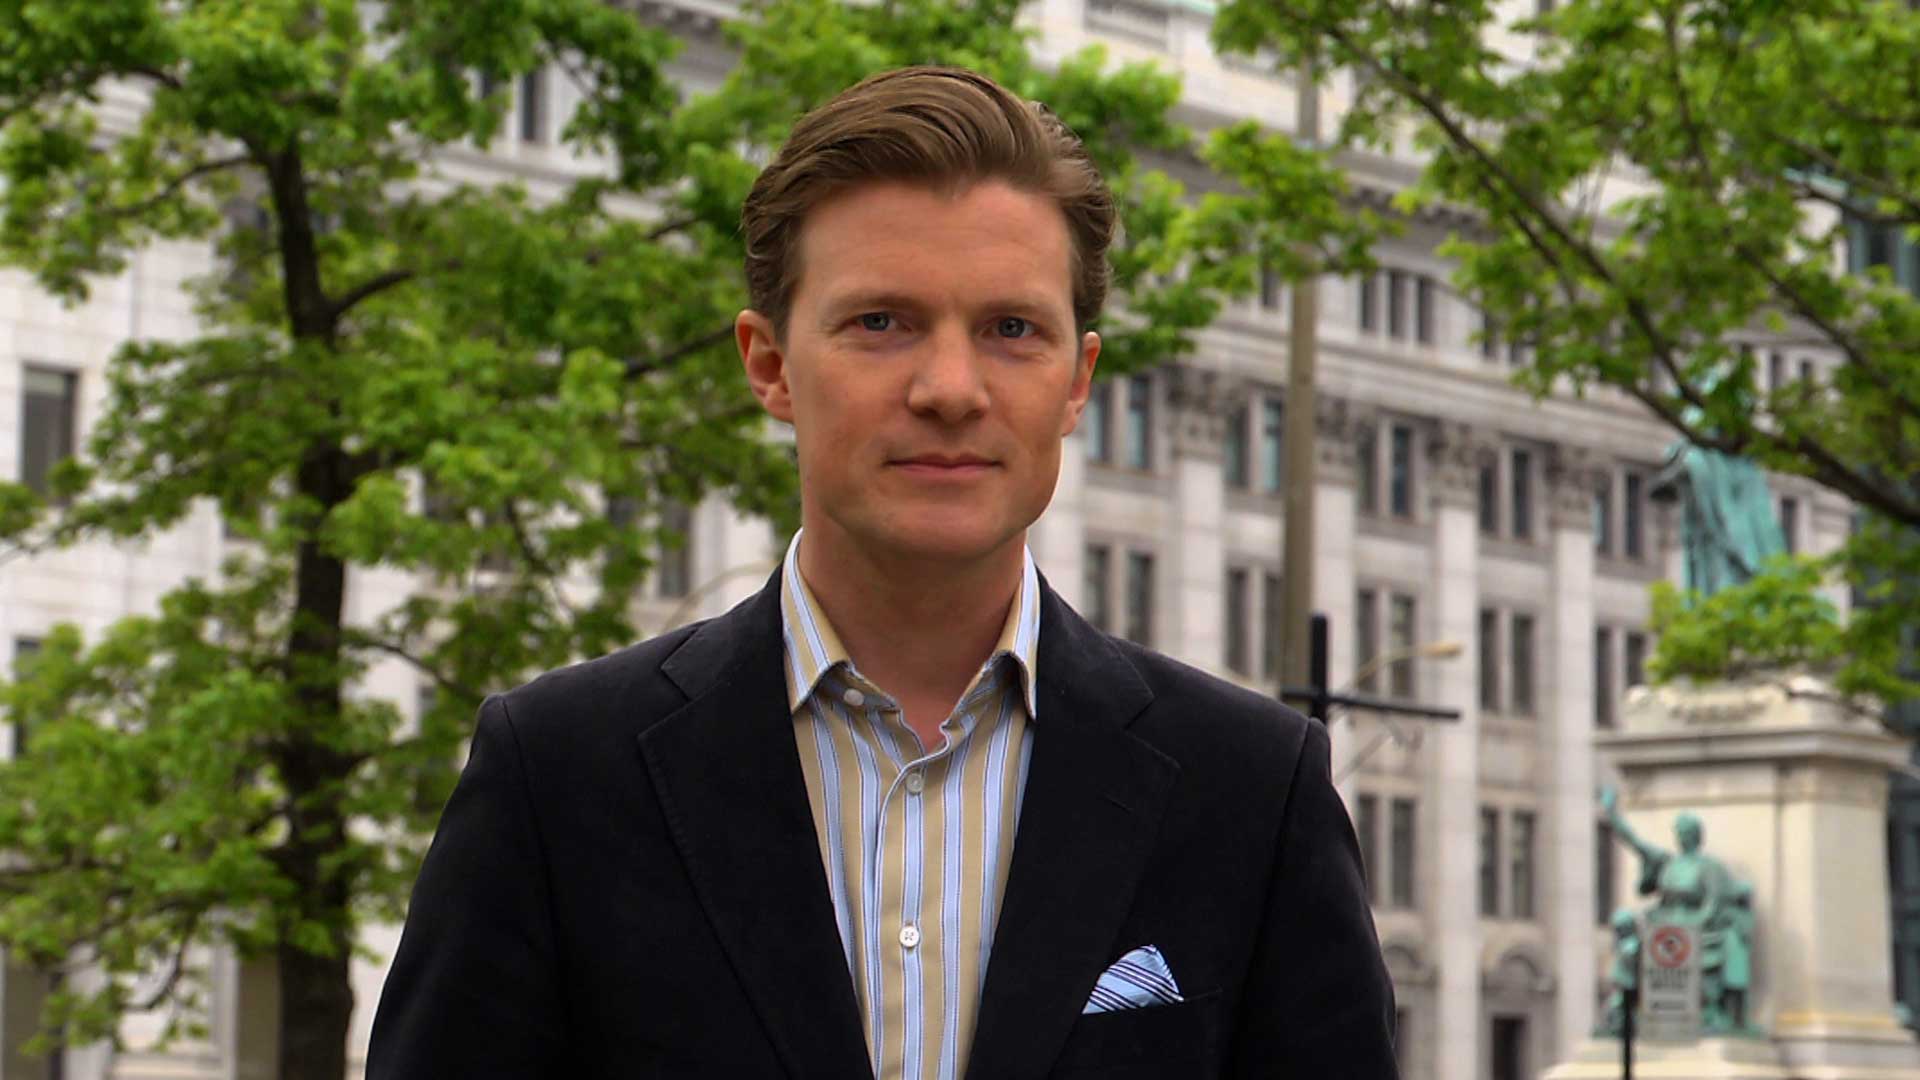 Author and program host Johan Norberg.